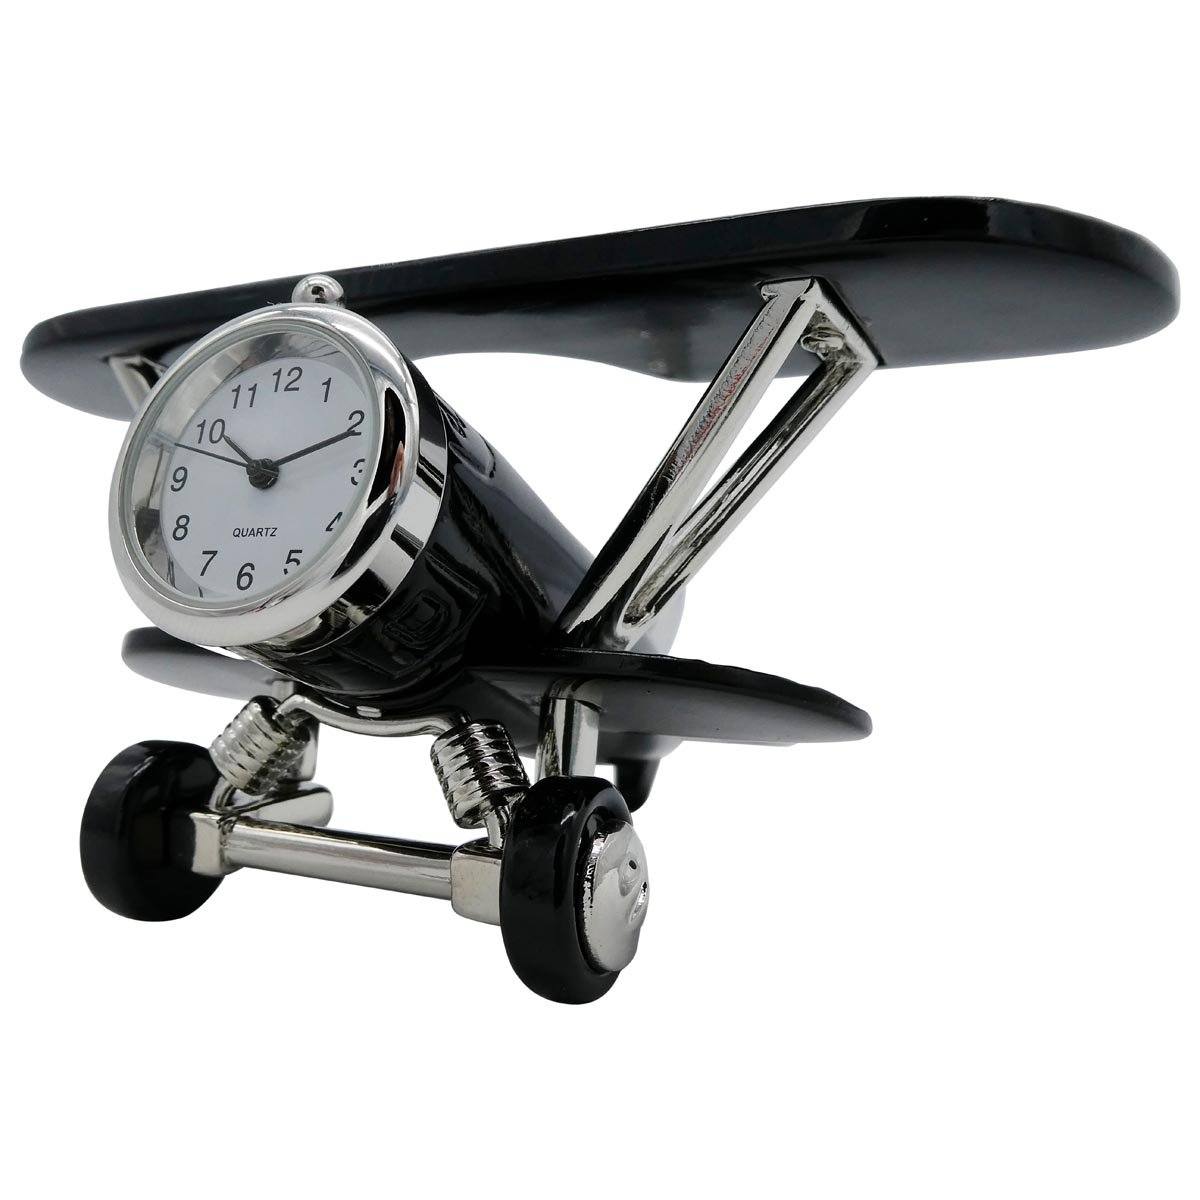 Pilot Toys Black Biplane Desk Clock - PilotMall.com